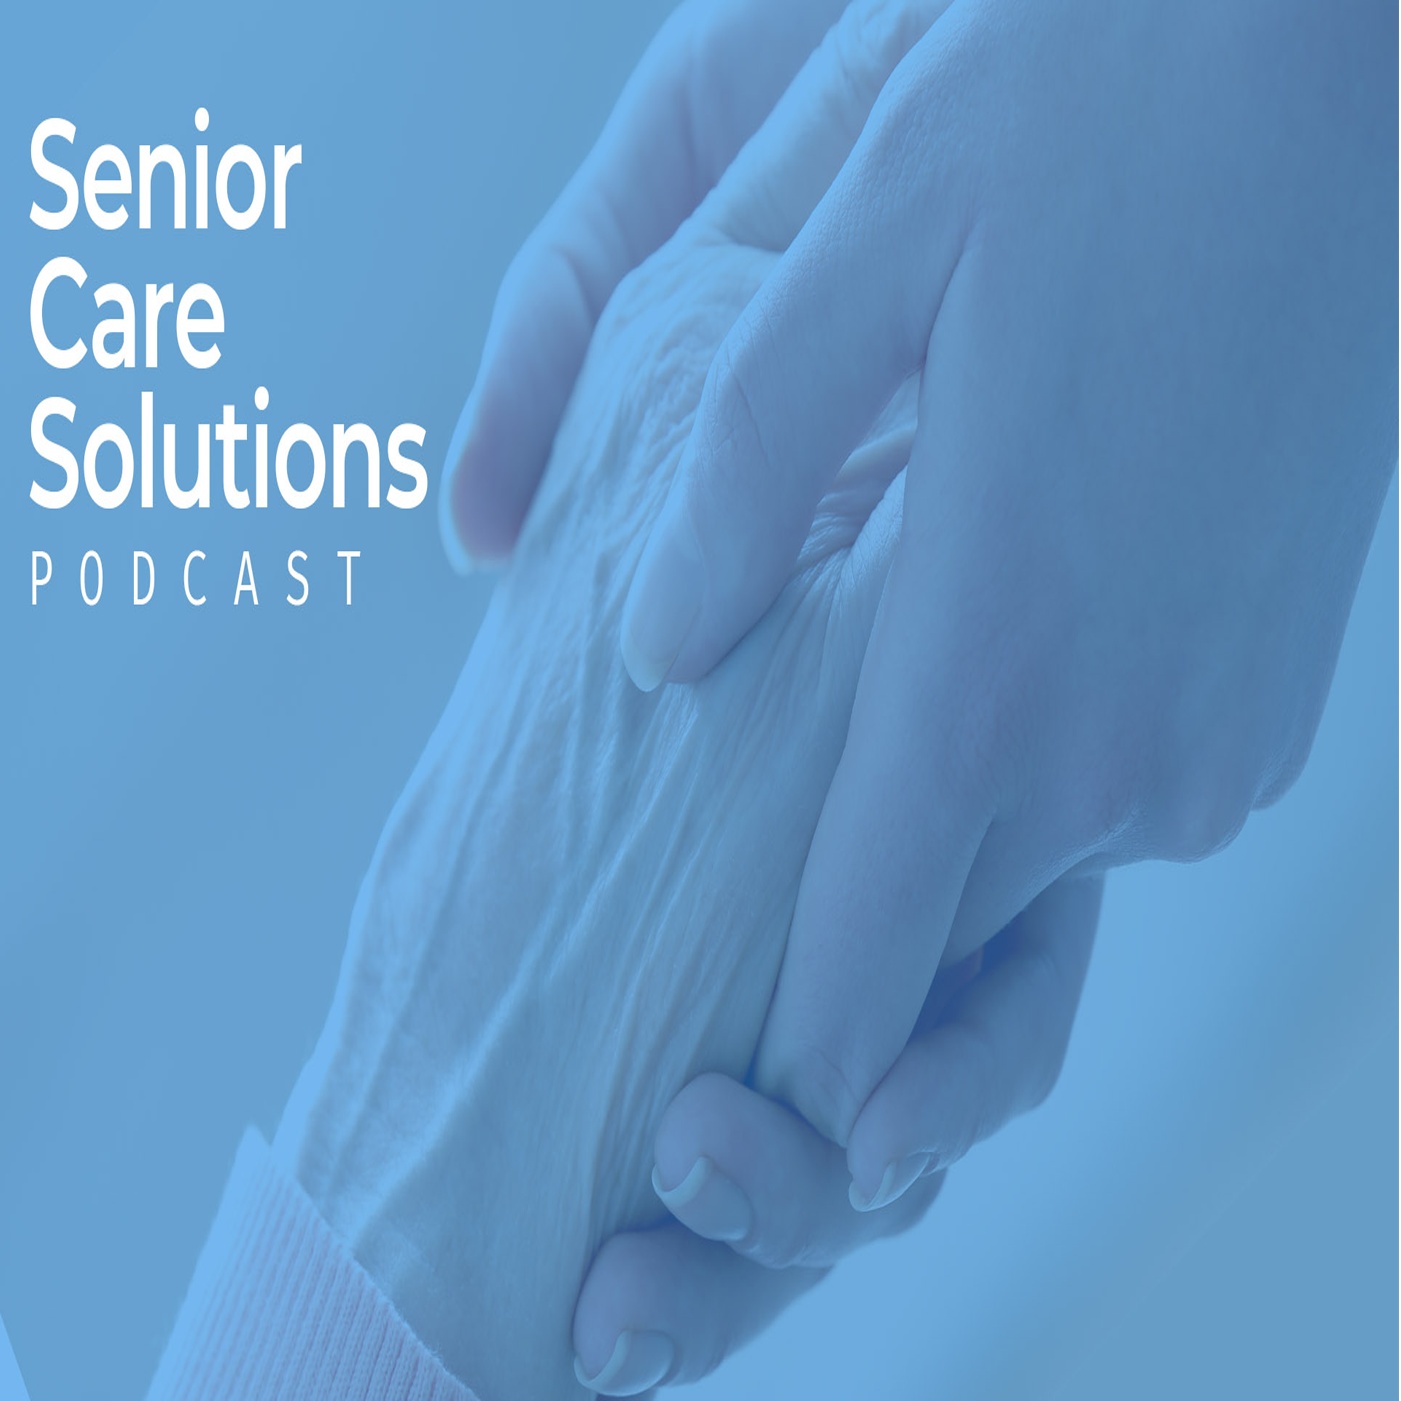 Senior Care Solutions Podcast Cover